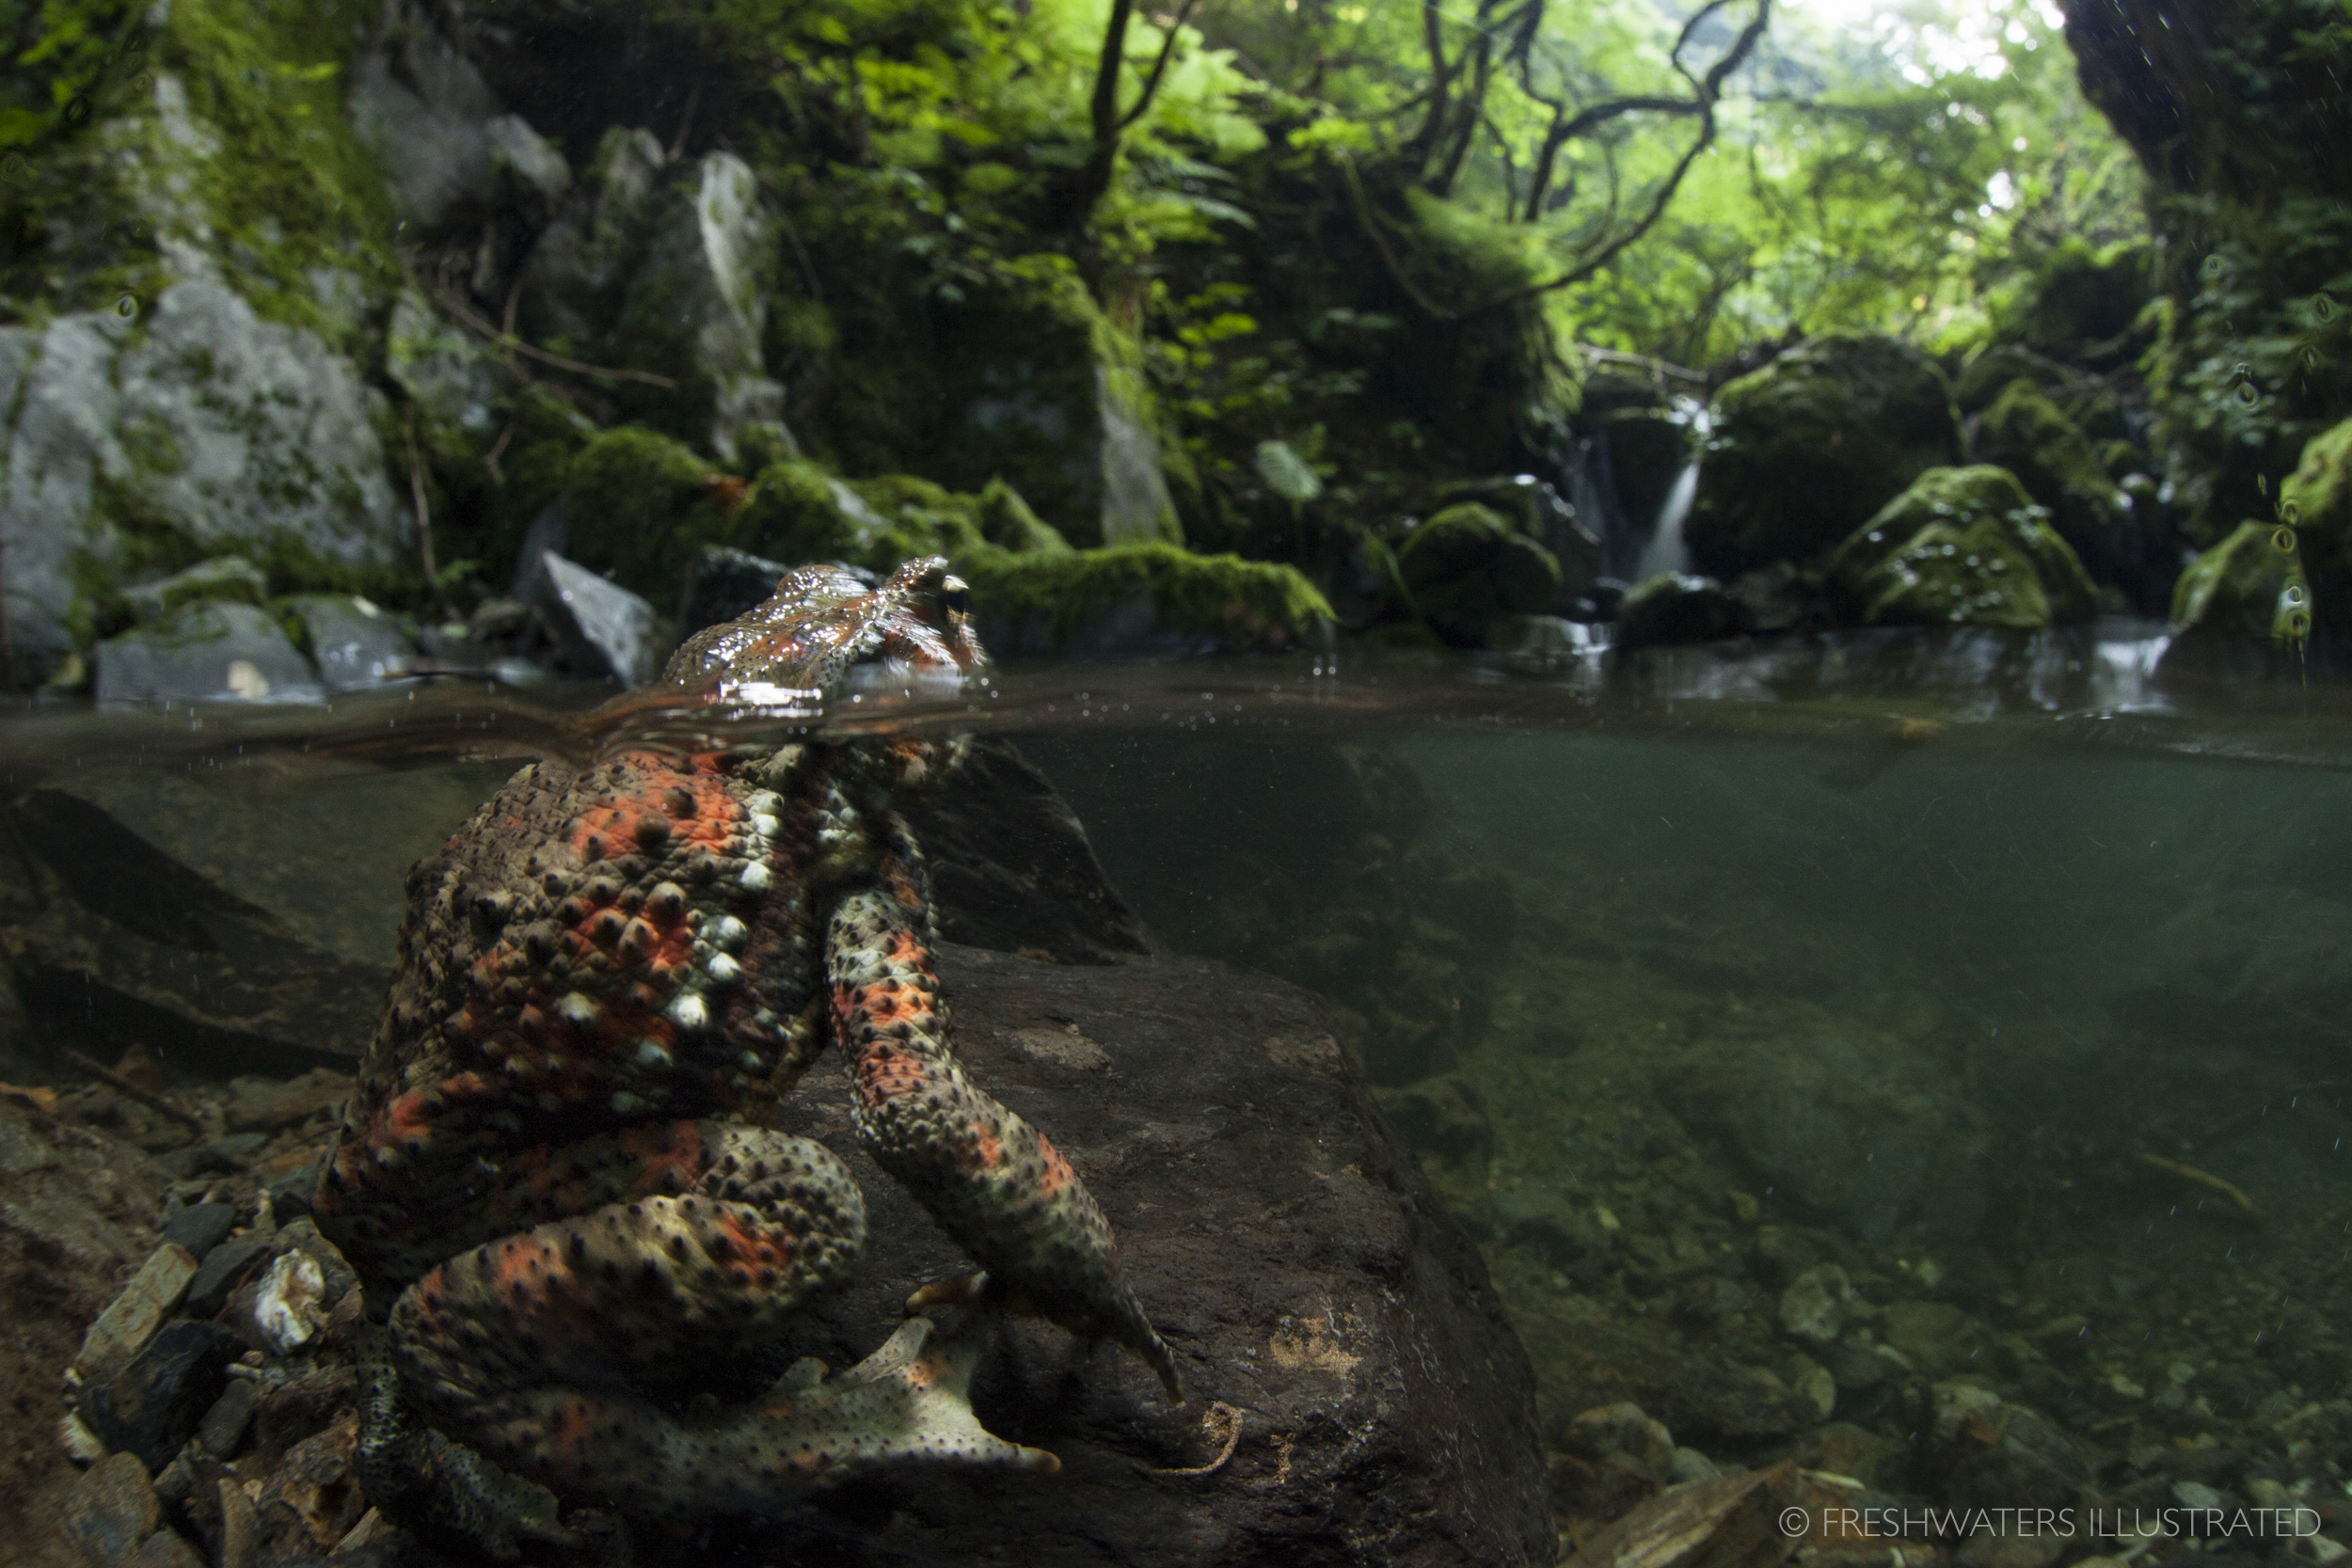  Japanese Stream Toad (Bufo torrenticora) Japan  www.FreshwatersIllustrated.org  